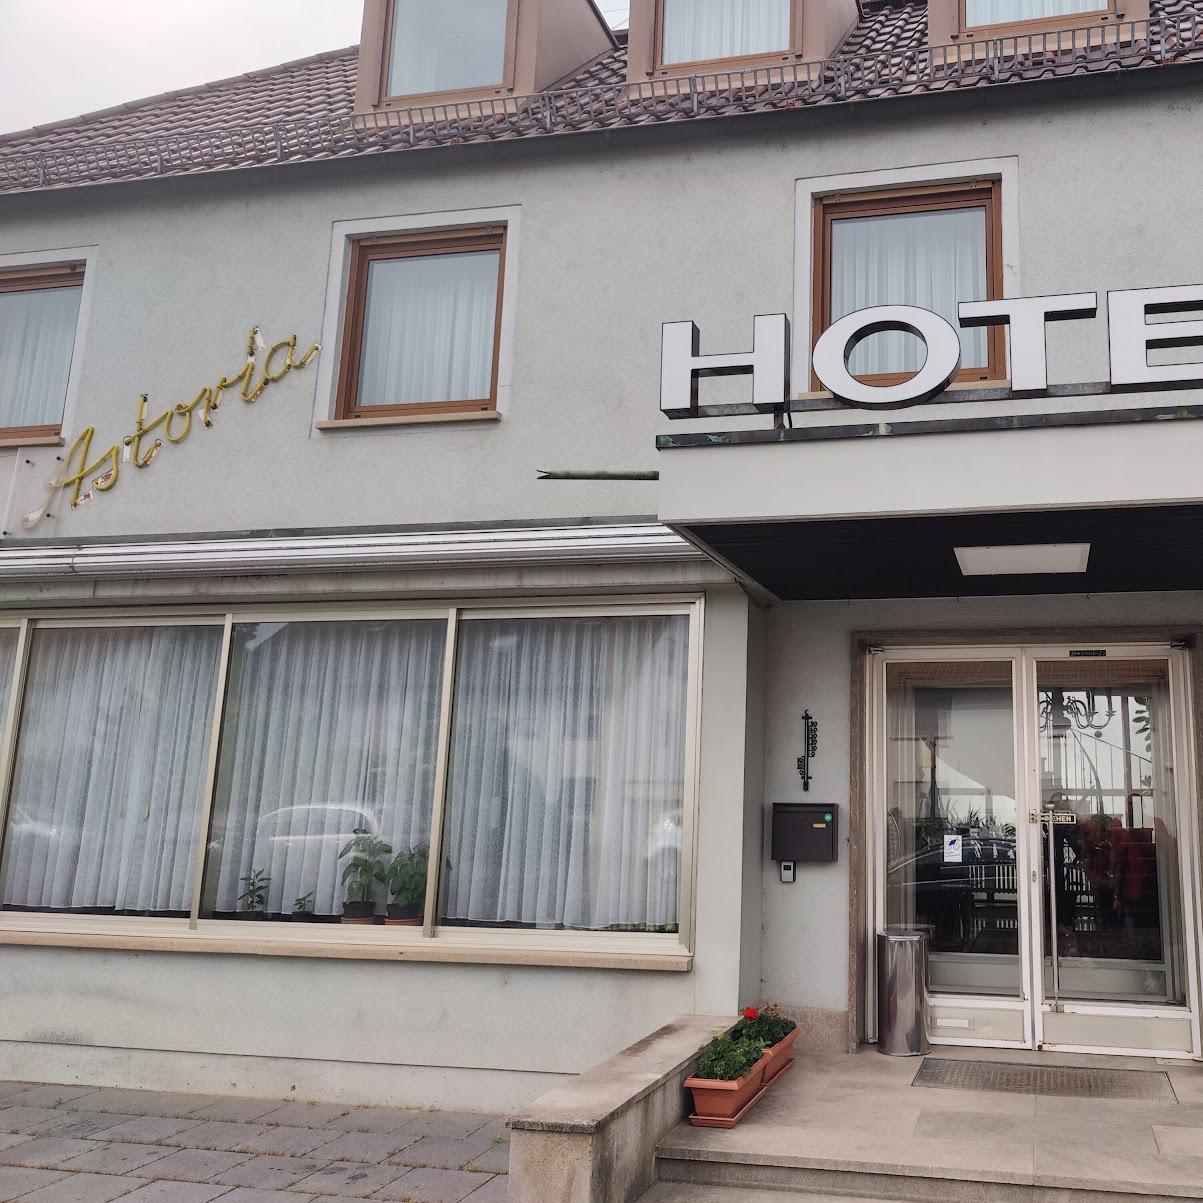 Restaurant "Hotel Astoria" in Bergrheinfeld